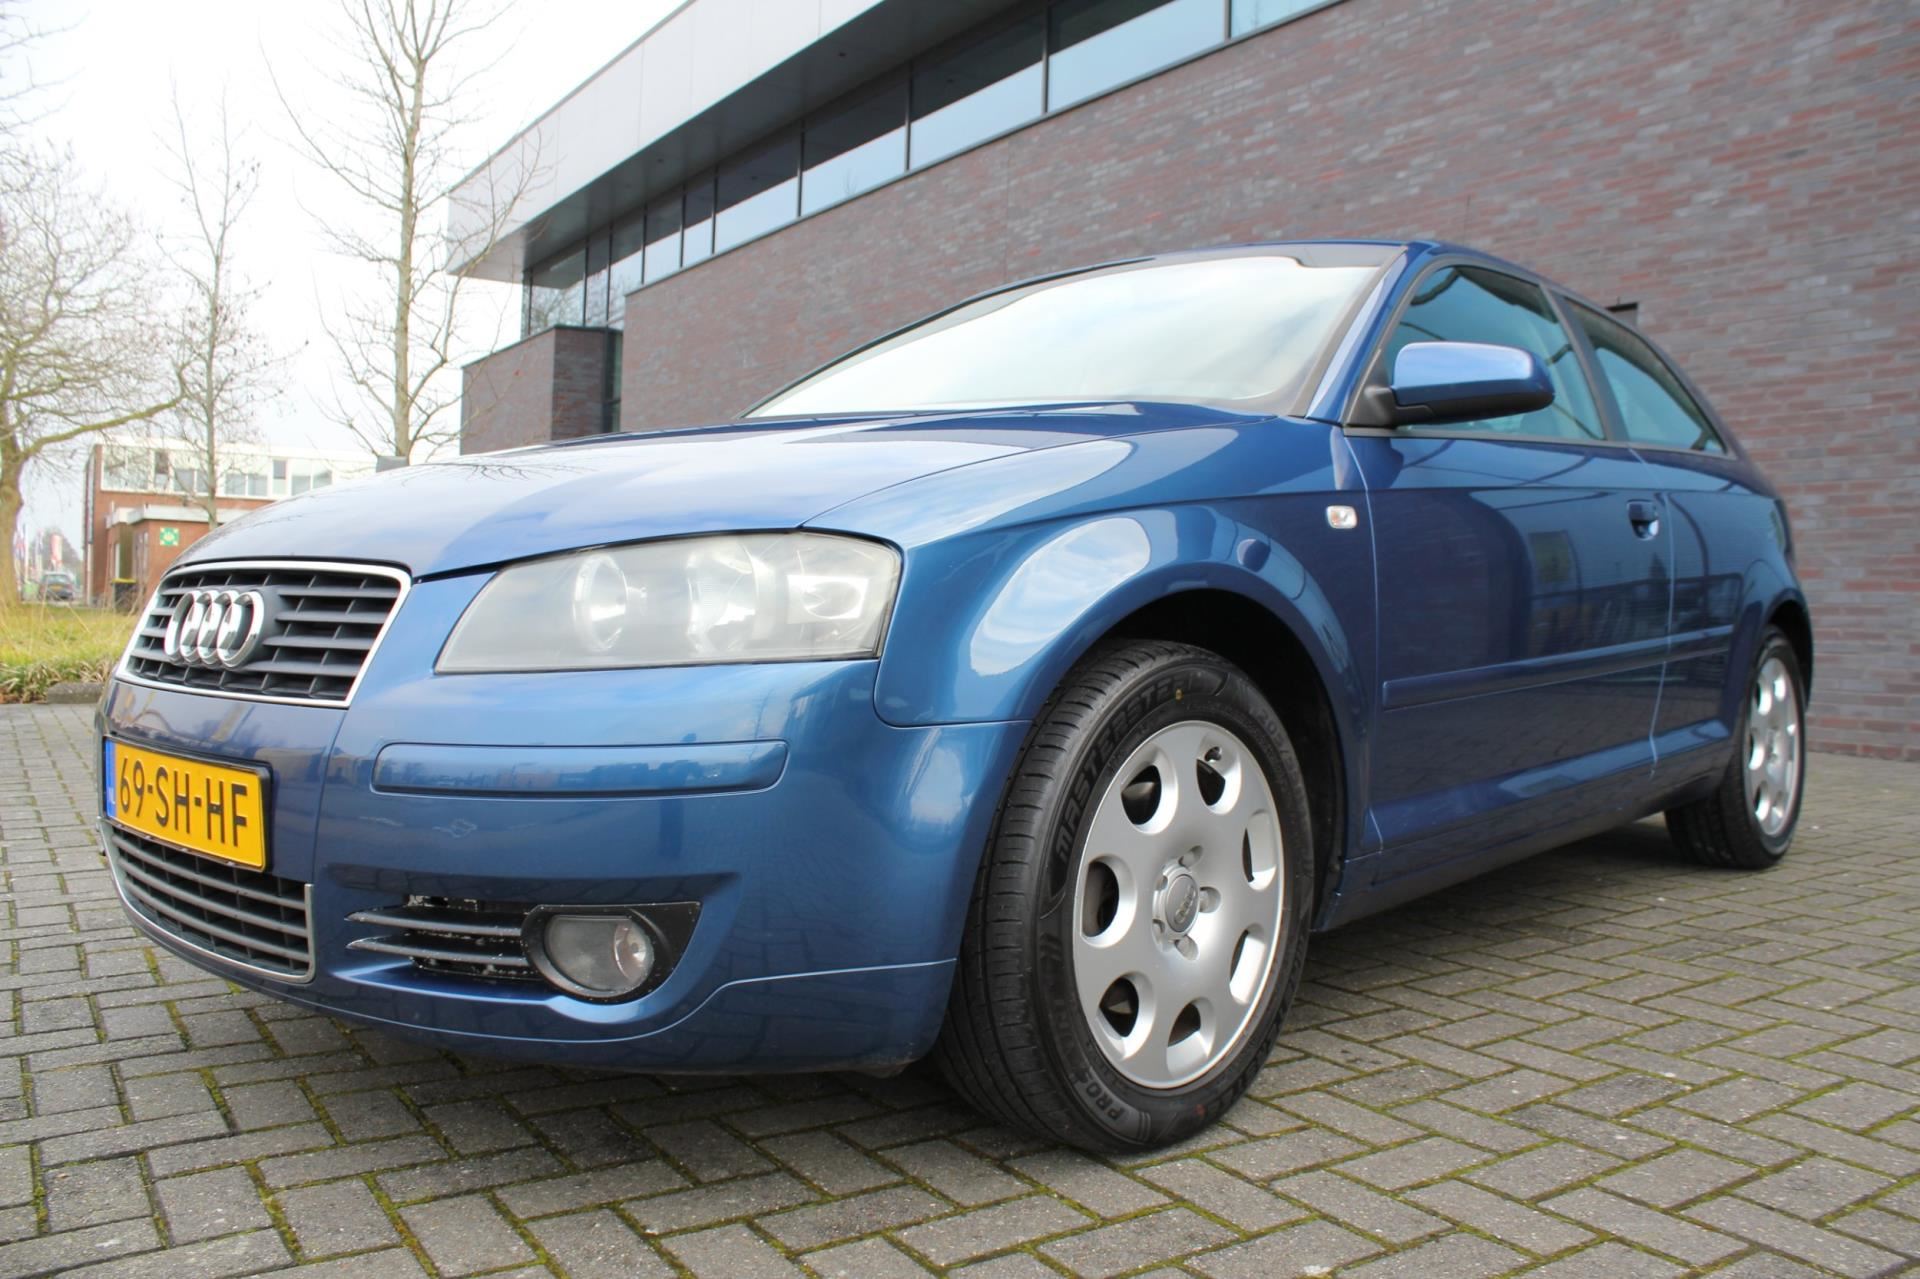 magneet Pak om te zetten Precies Audi A3 - 2.0 FSI Attraction Benzine uit 2006 - www.garageautoflex.nl